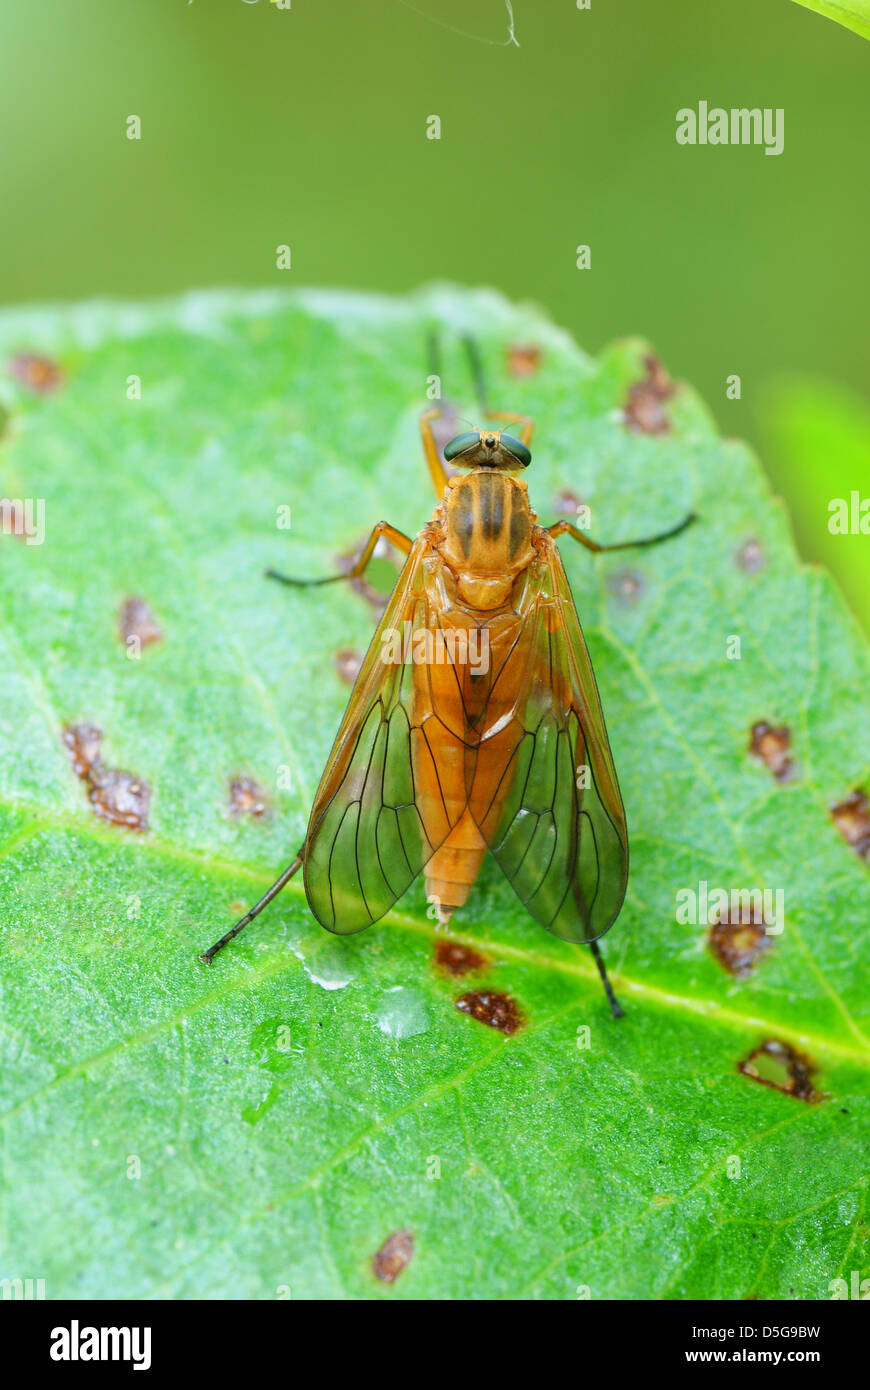 Big brown fly sur fond vert feuille Banque D'Images